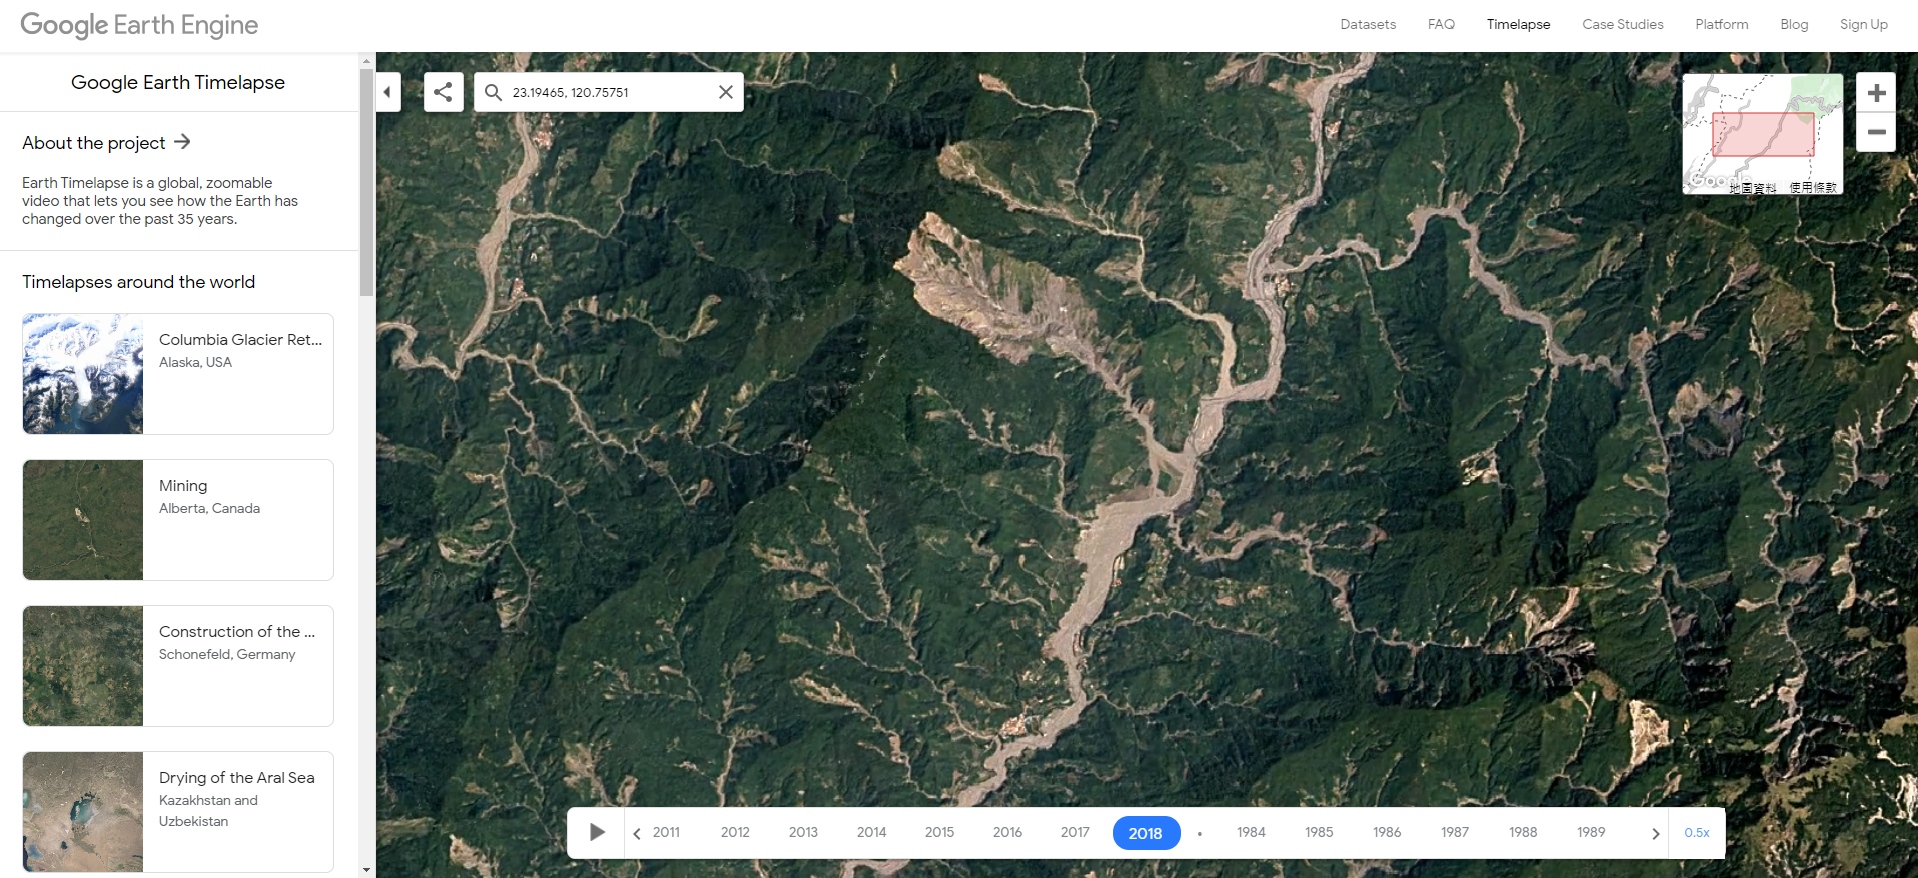 圖二、Google Earth Engine Timelapse布唐布納斯溪於2009年莫拉克颱風發生大規模崩塌 (資料來源: https://earthengine.google.com/timelapse)